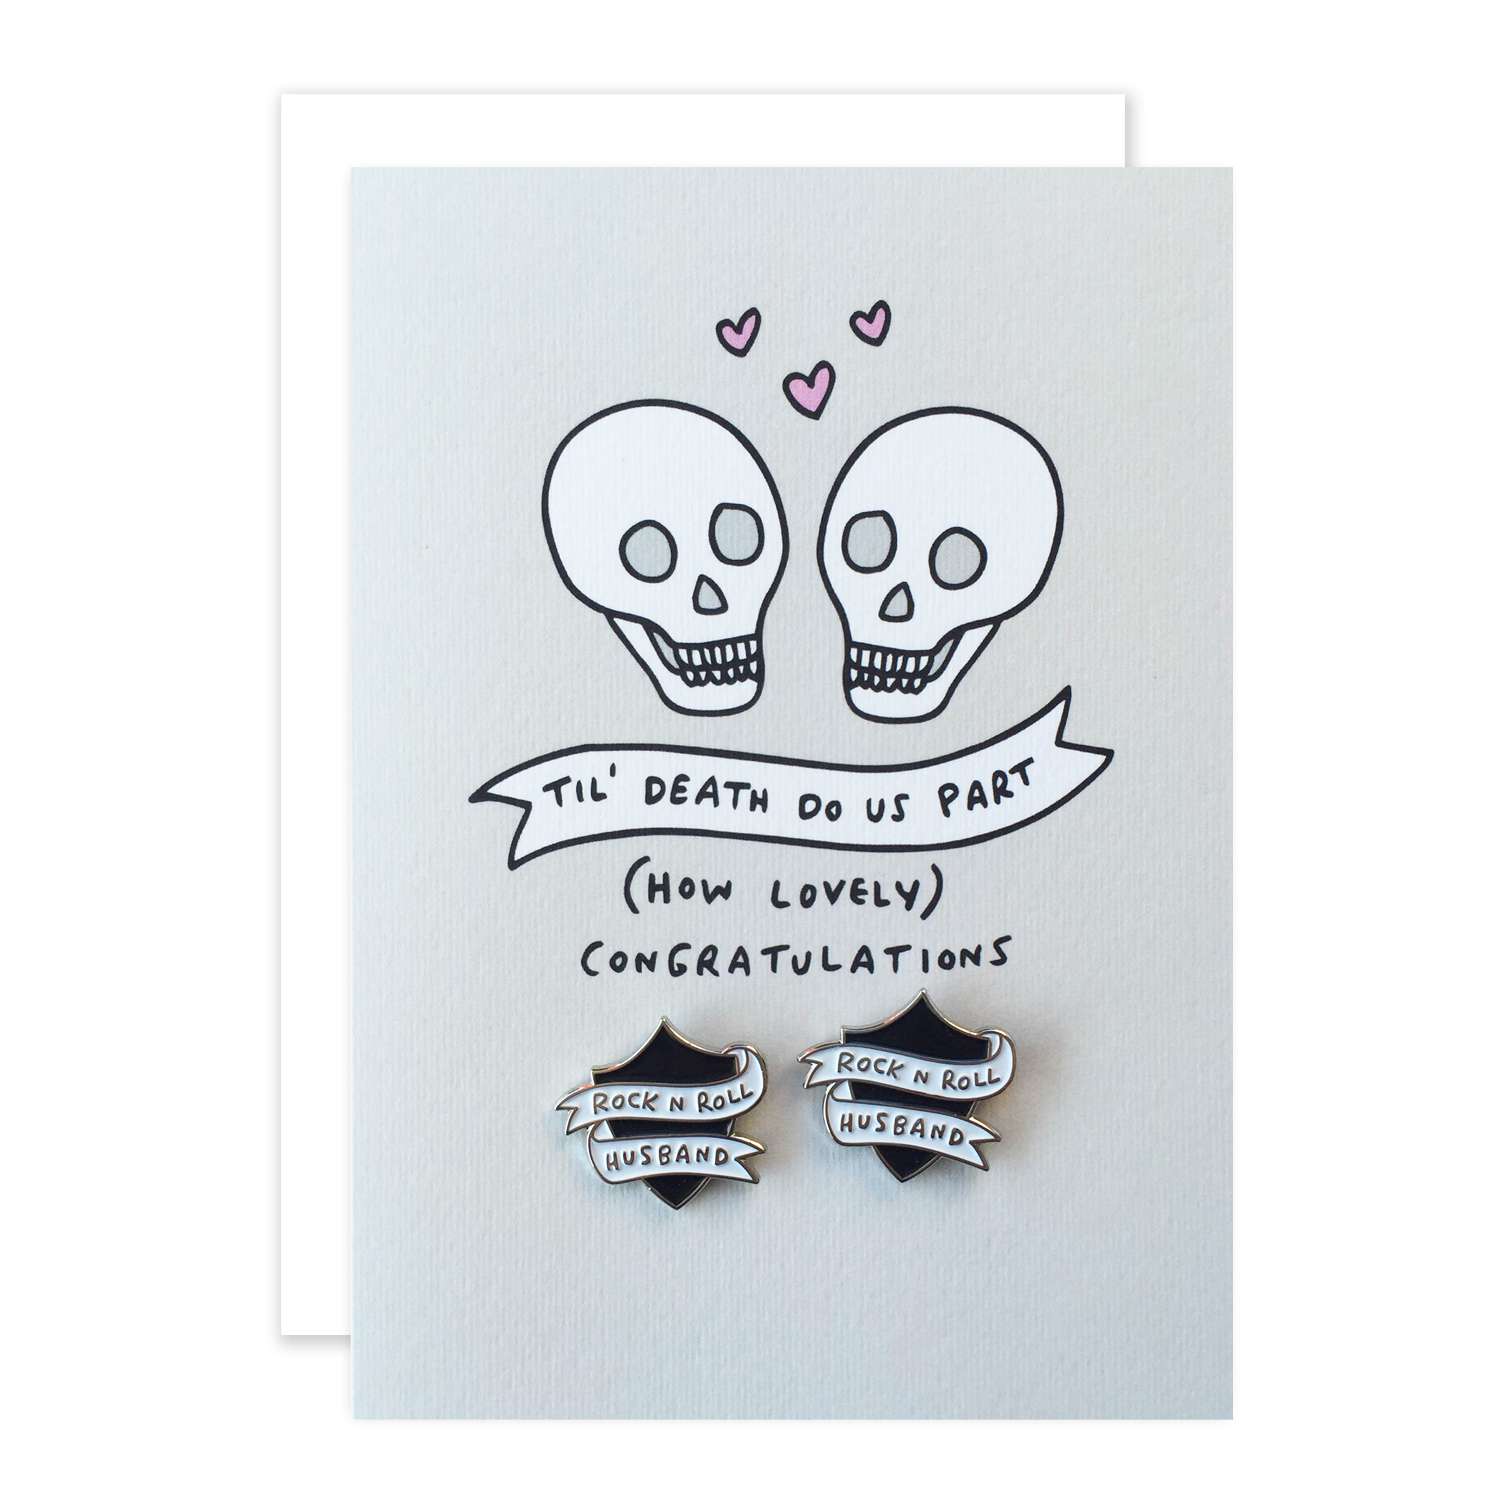 rocknrollbride x veronica dearly wedding cards with pins (1)